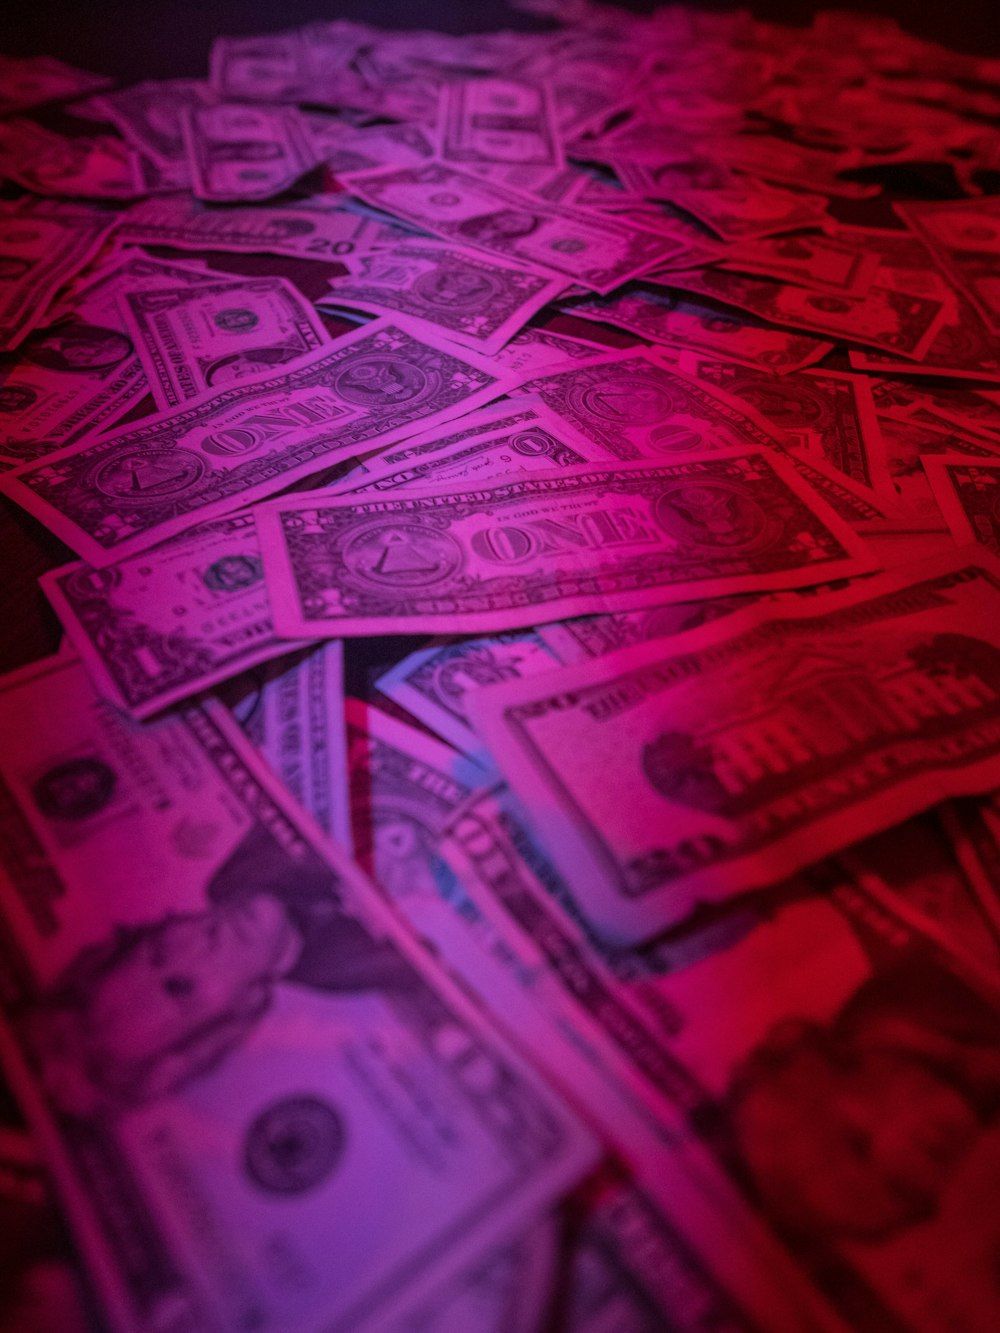 A pile of 20 dollar bills - Money